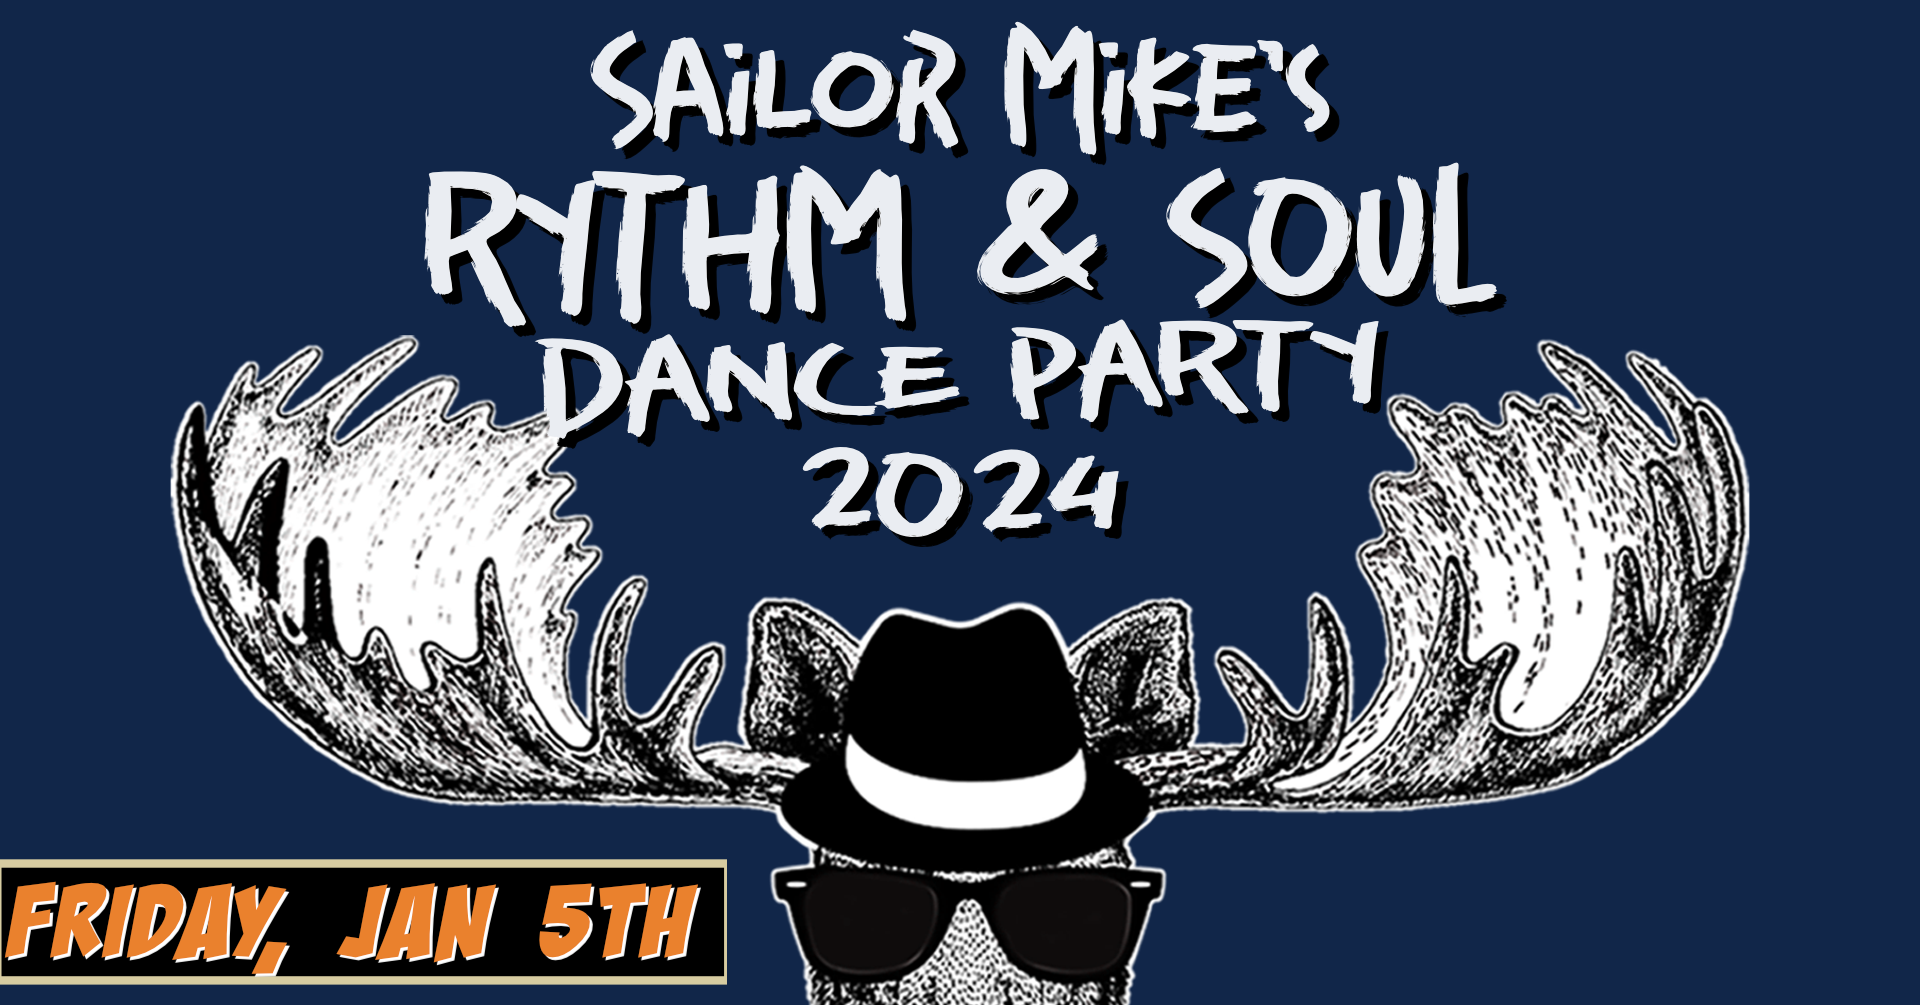 SAILOR MIKE’S RHYTHM & SOUL DANCE PARTY 2024